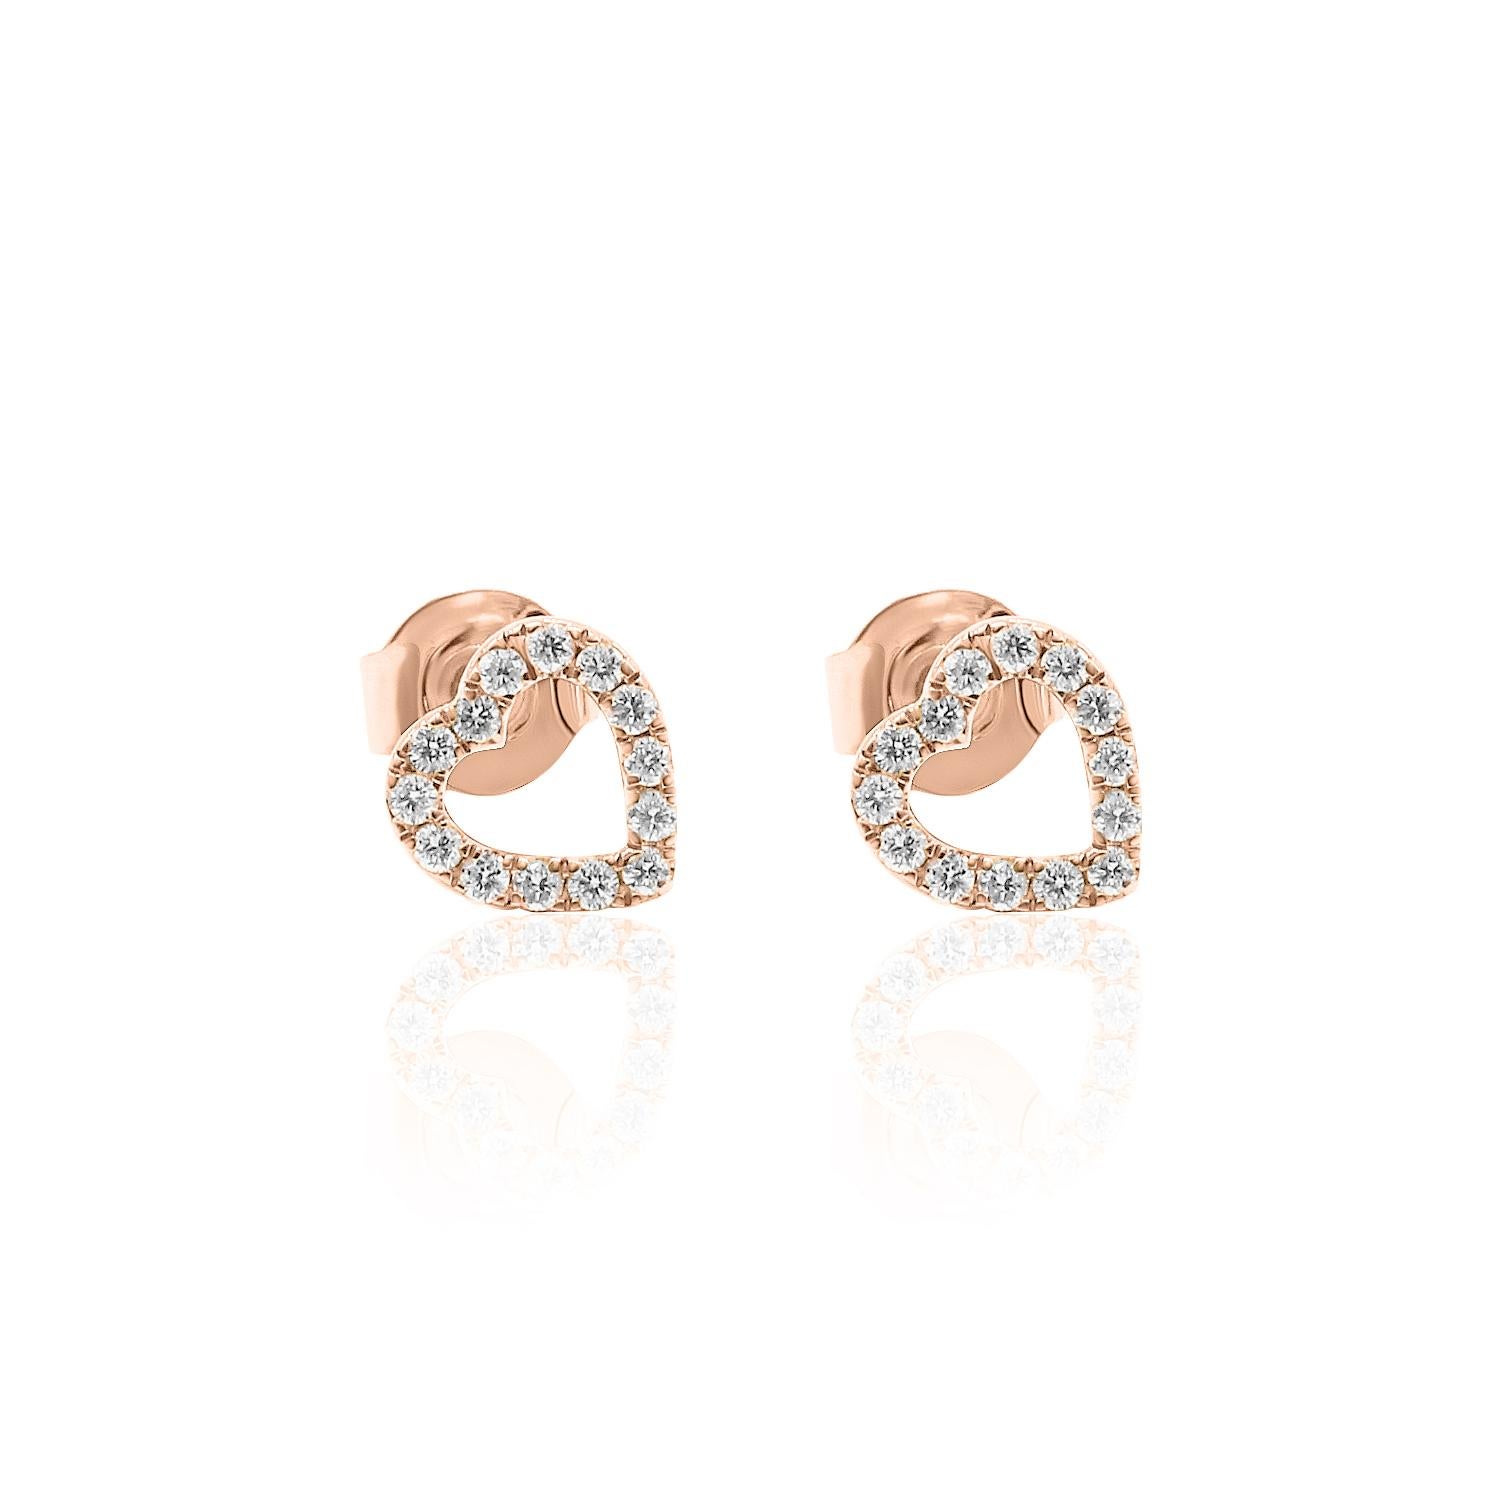 Heart Shape Diamond Earrings 14K, White, Yellow, and Rose Gold 1